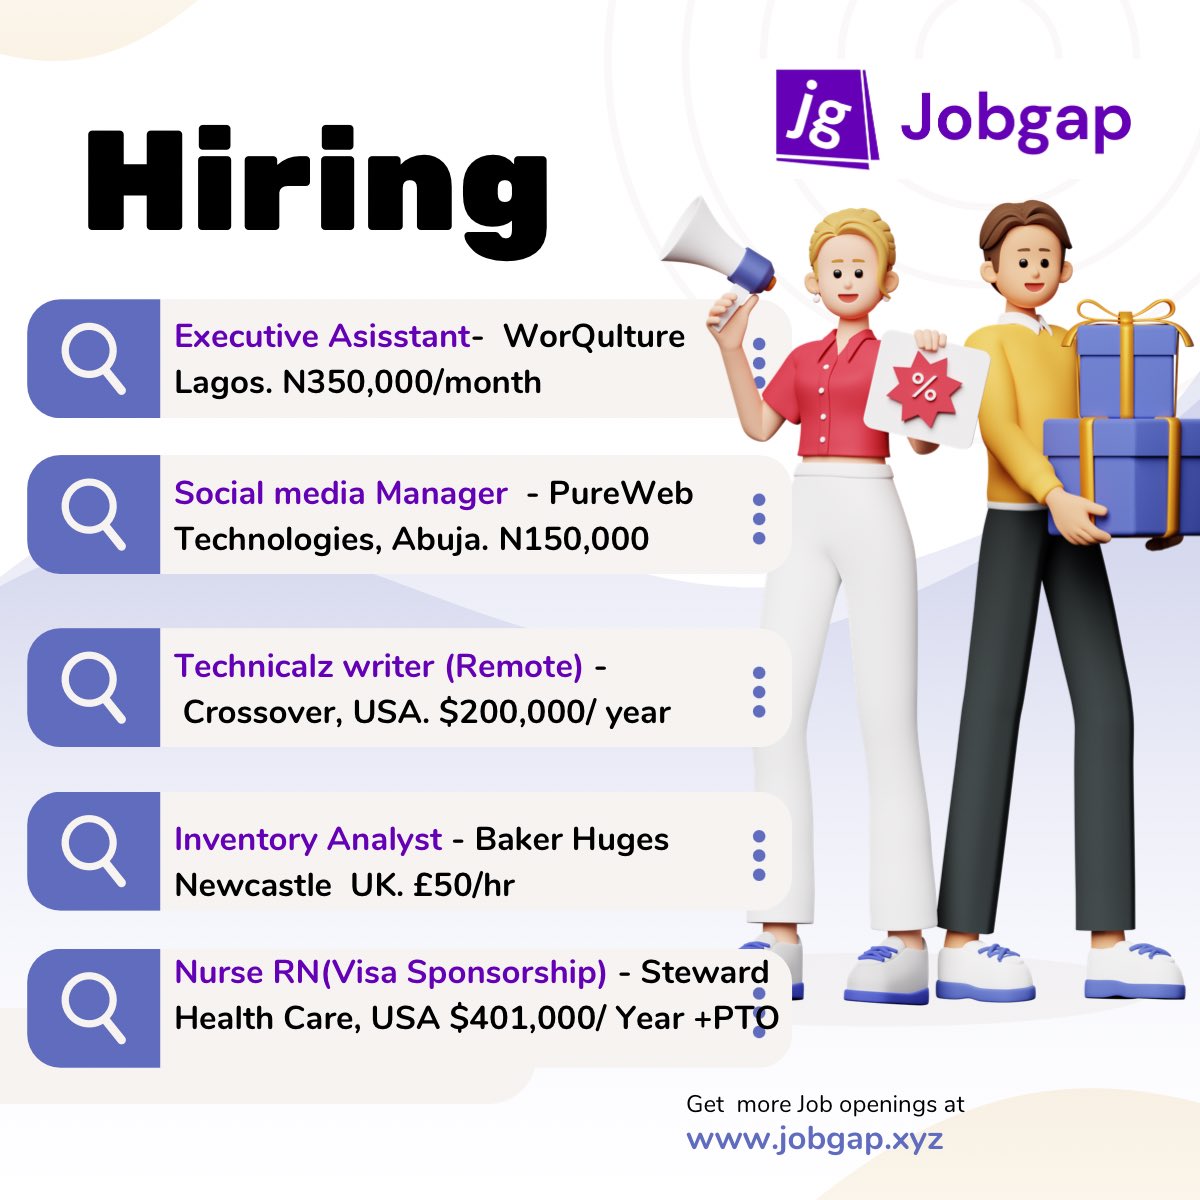 Top Hiring Today‼️‼️‼️

Visit Jobgap.xyz to apply for all job openings in any location. 

#HIRINGNOW #hiringalert #jobgap #Jobseekers